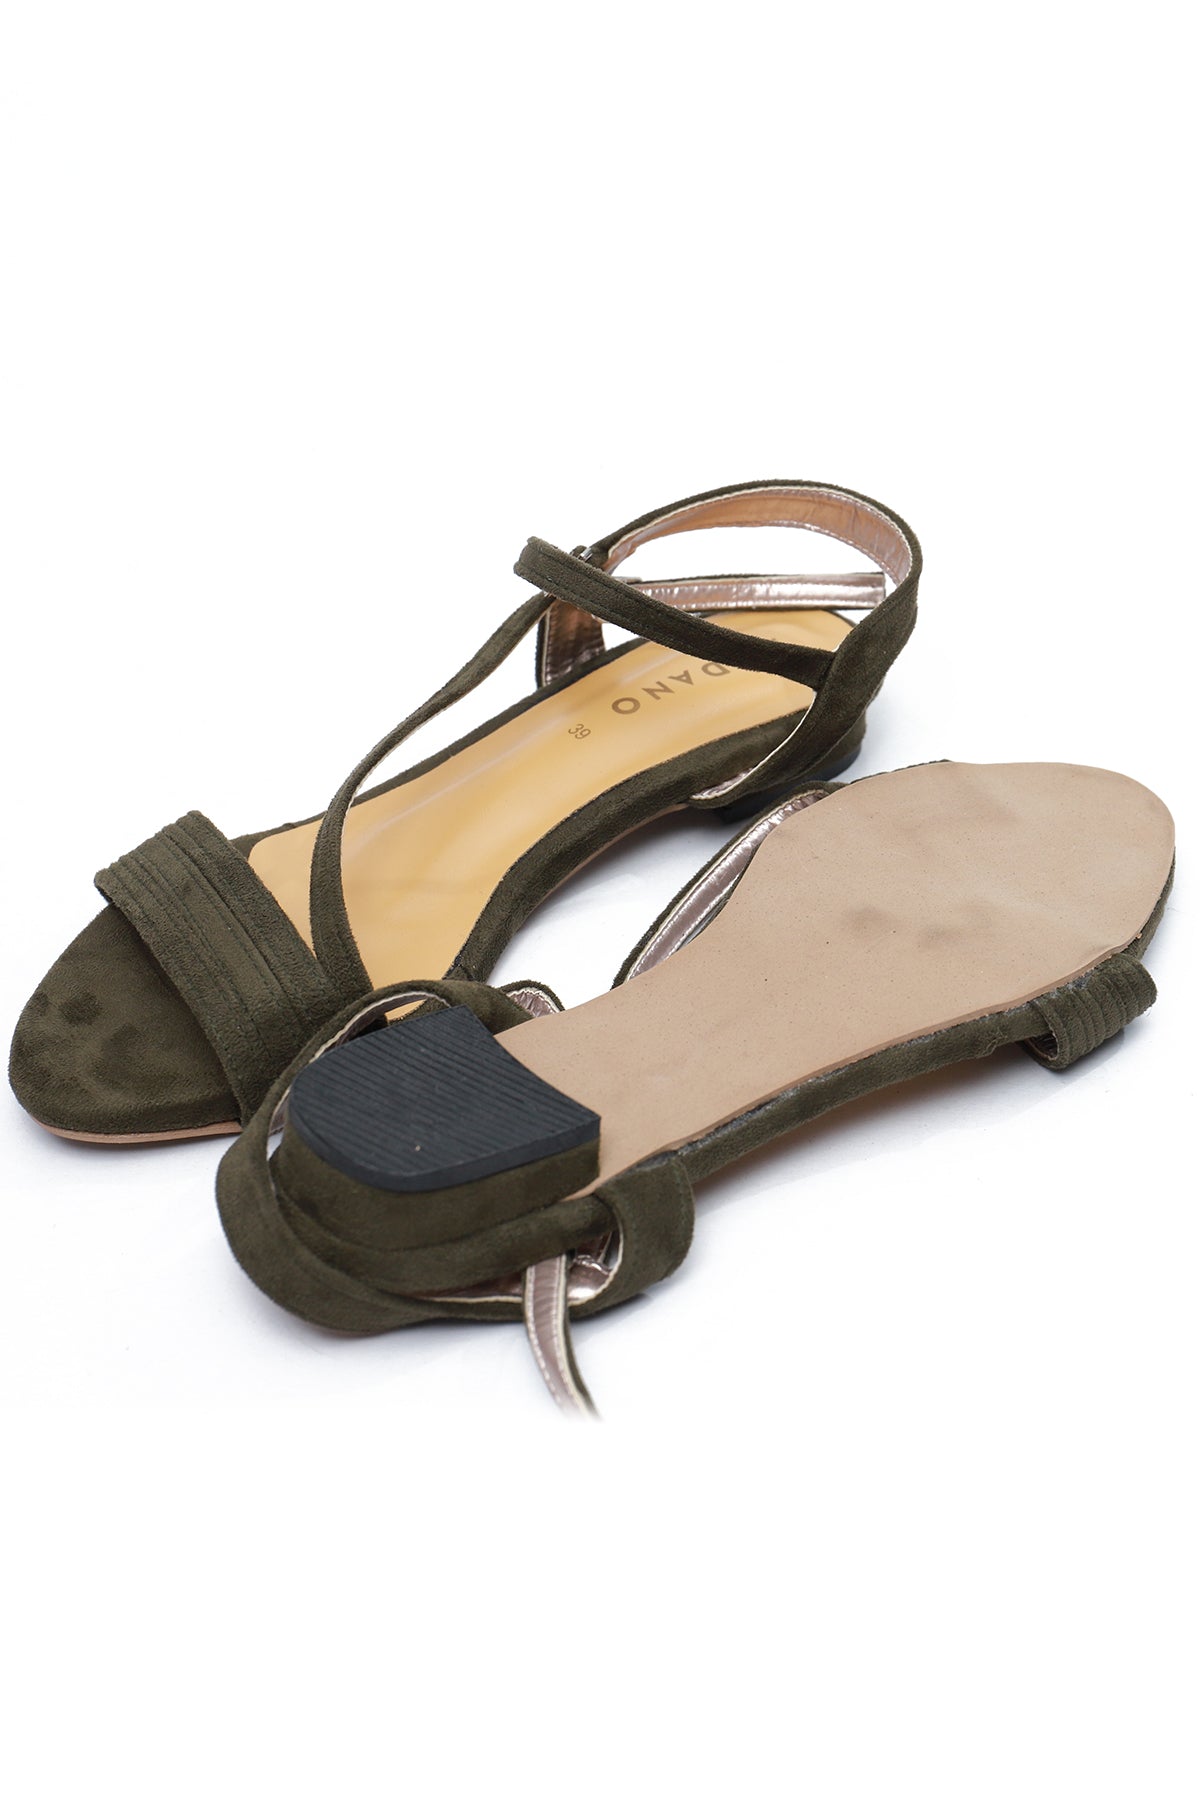 Modano Womens Casual Sandal Shoe